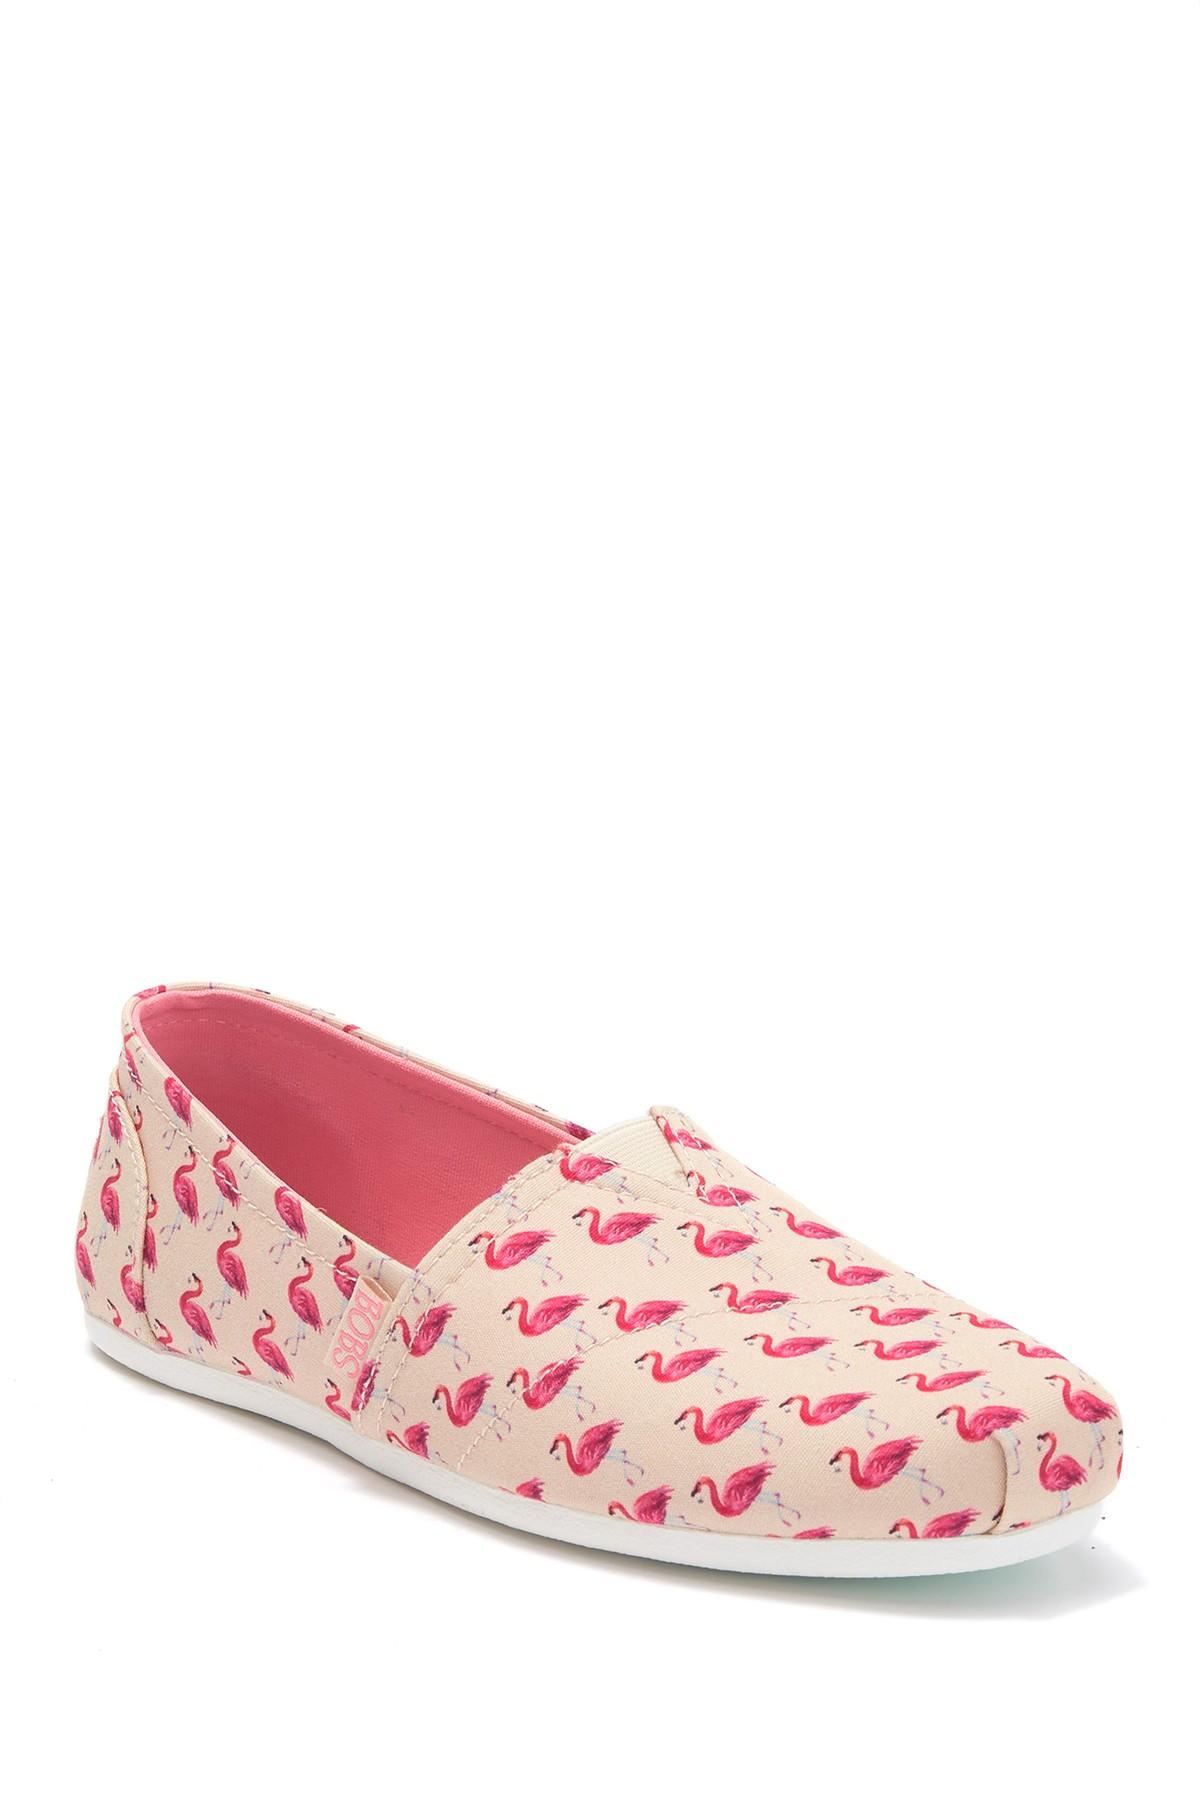 Skechers Bobs Flamingo Slip-on Sneaker 